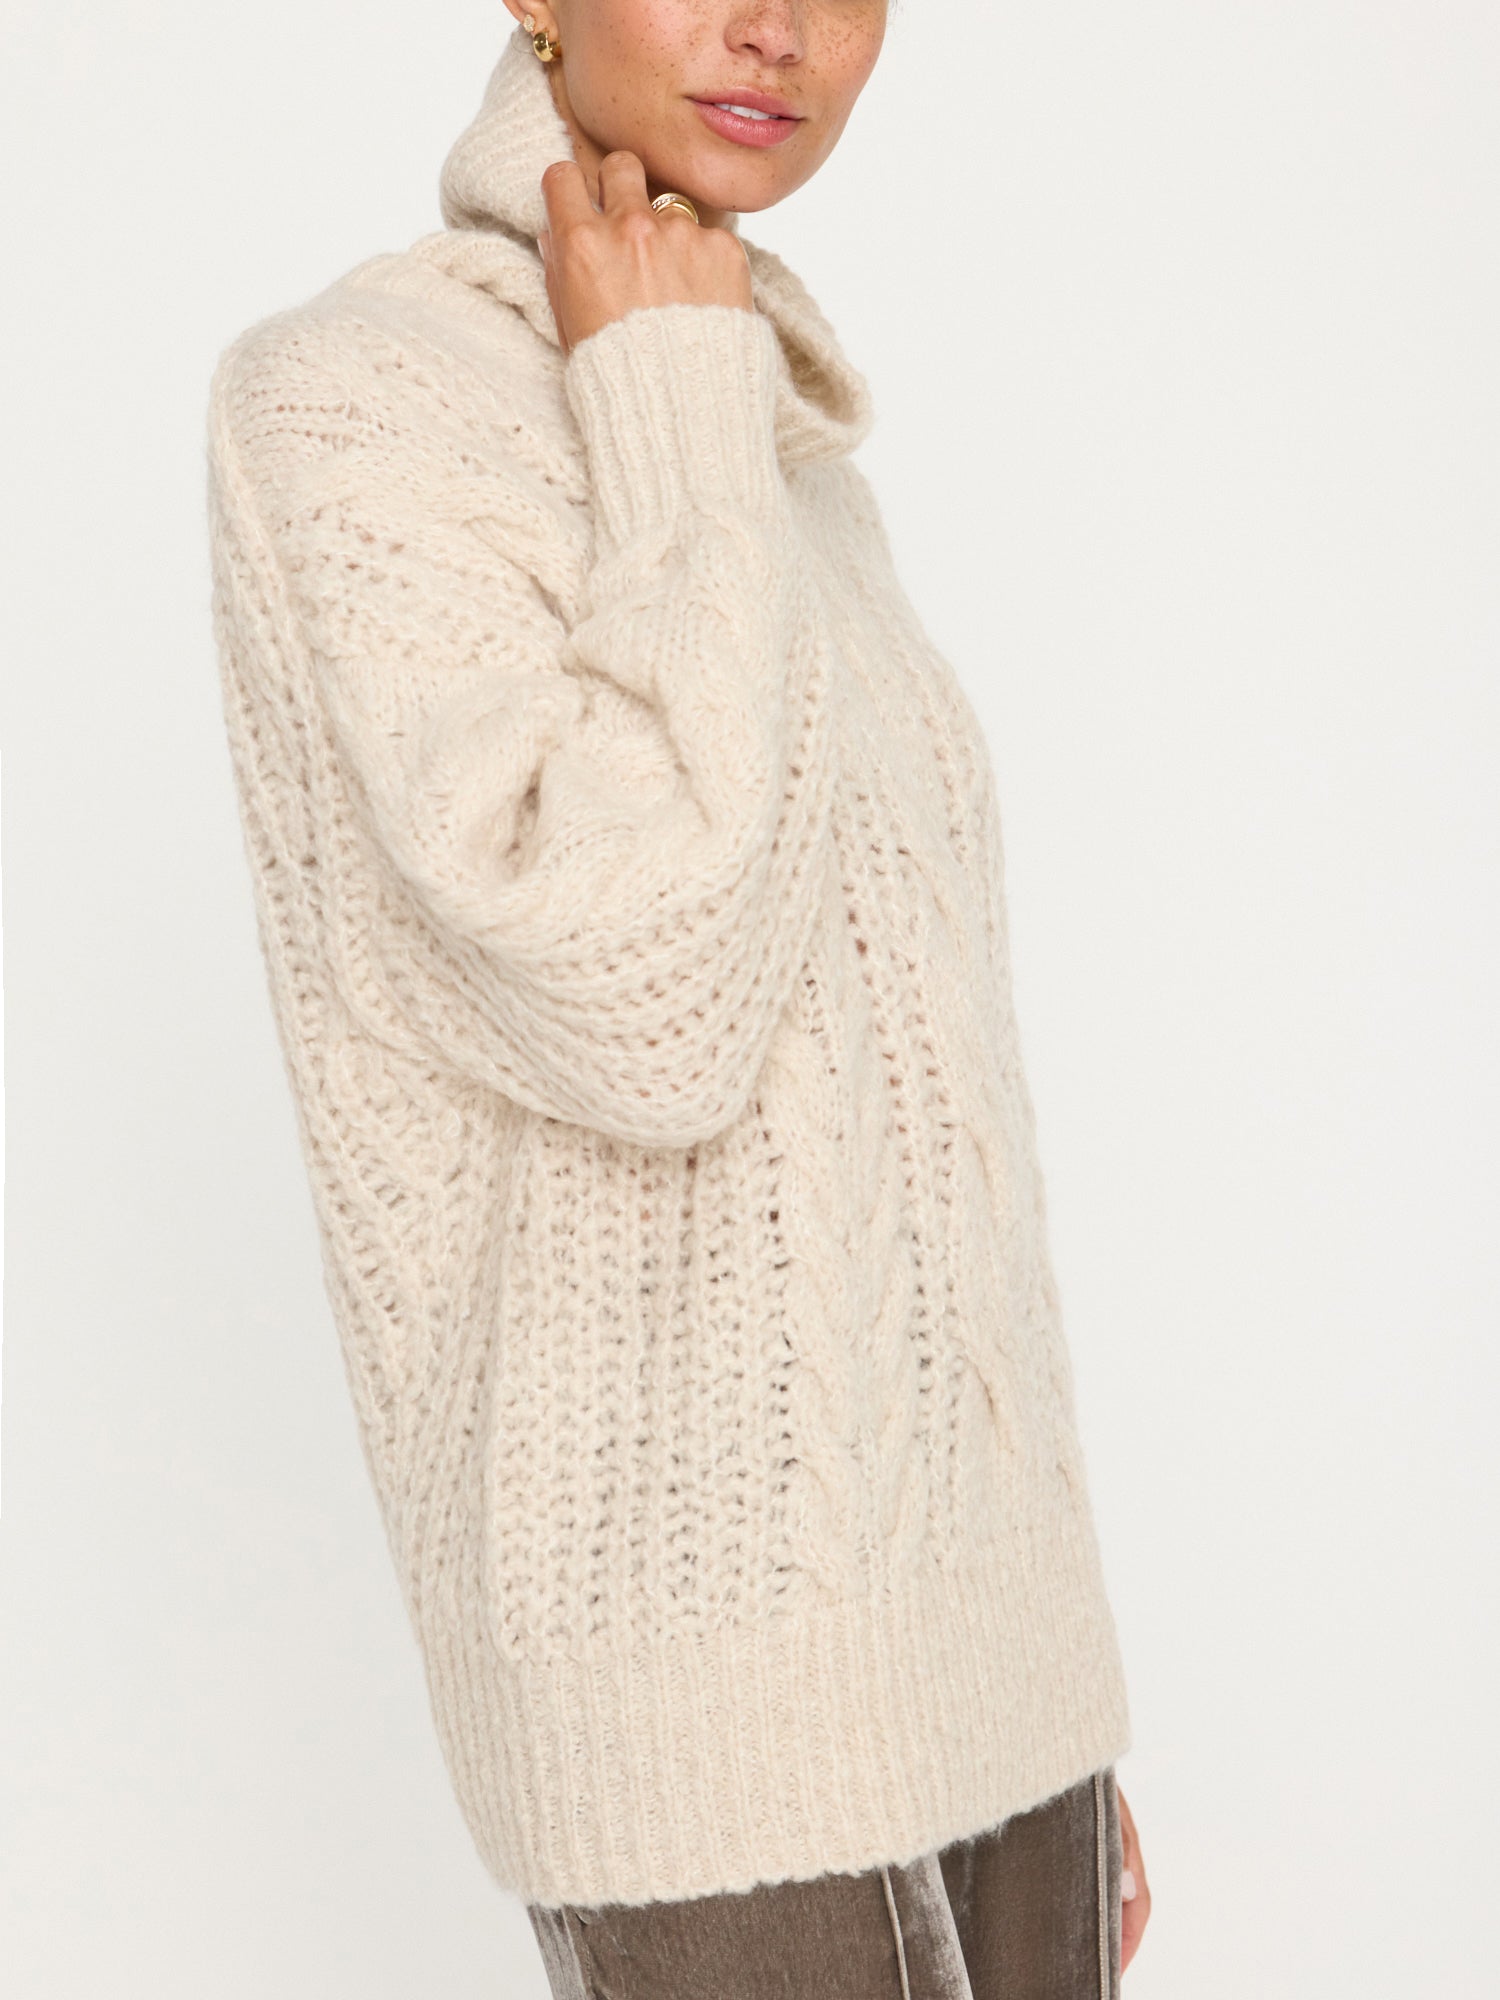 Elden cable knit beige turtleneck sweater side view